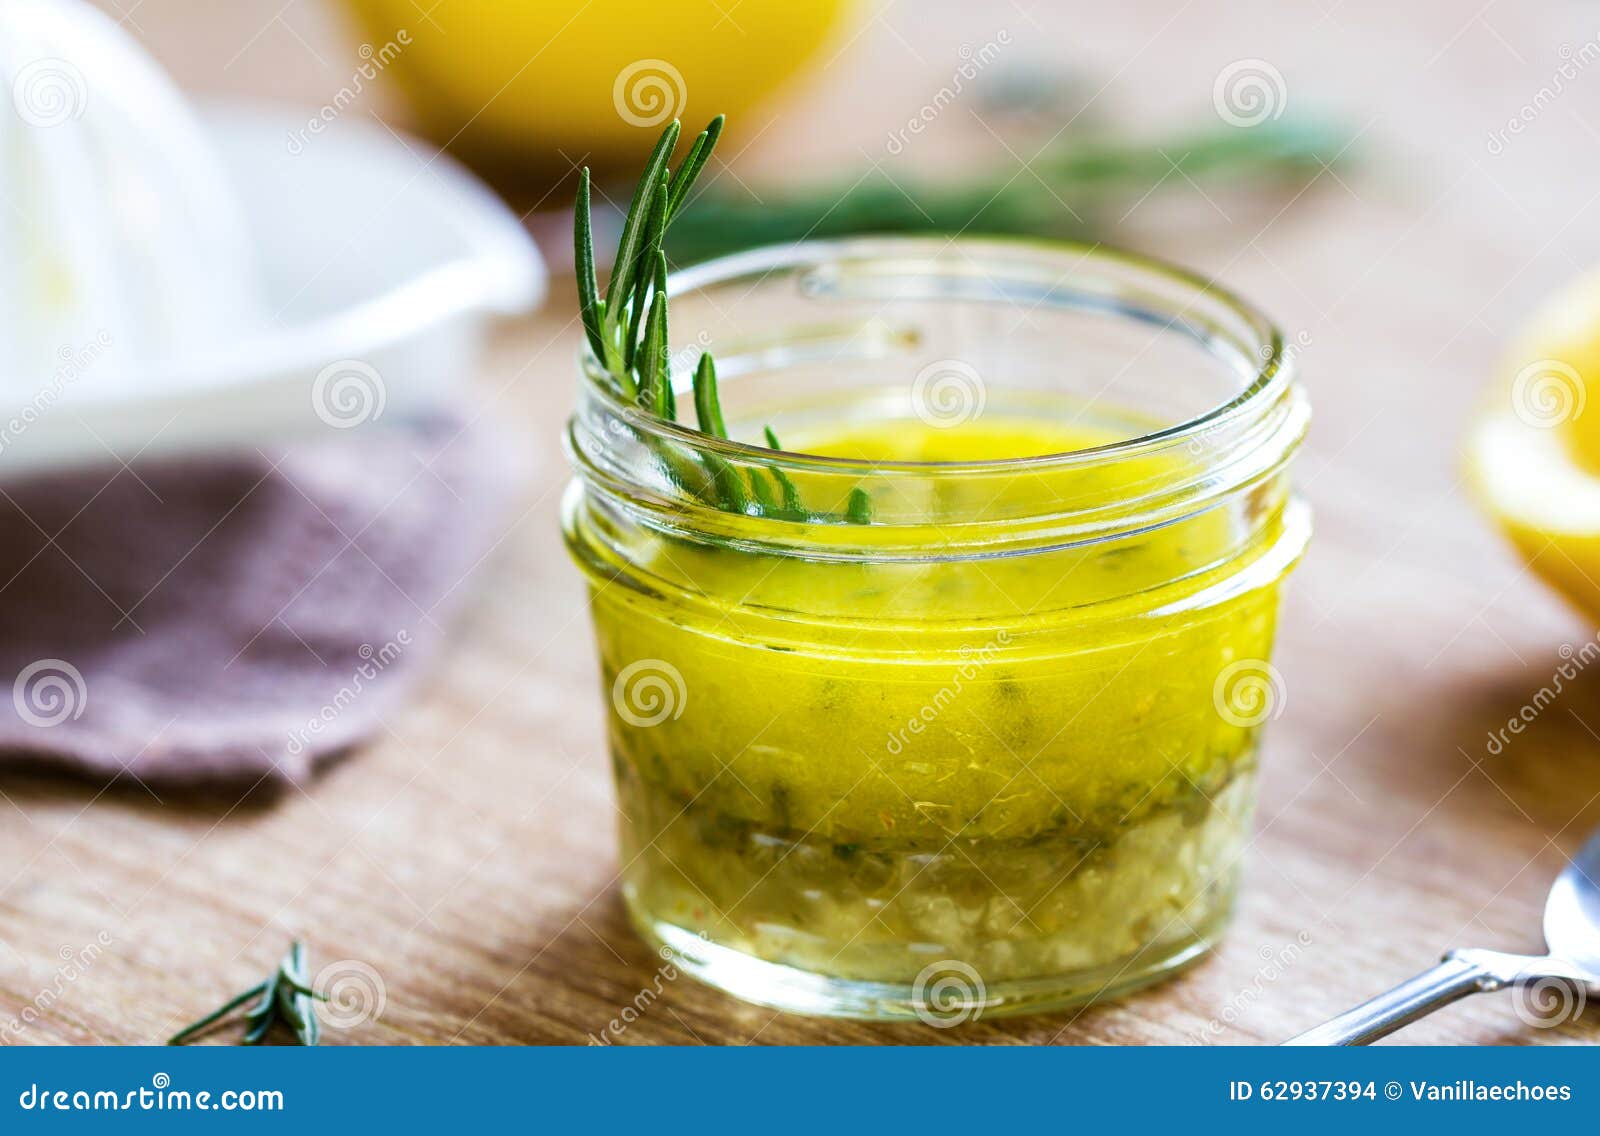 rosemary and garlic lemon salad dressing